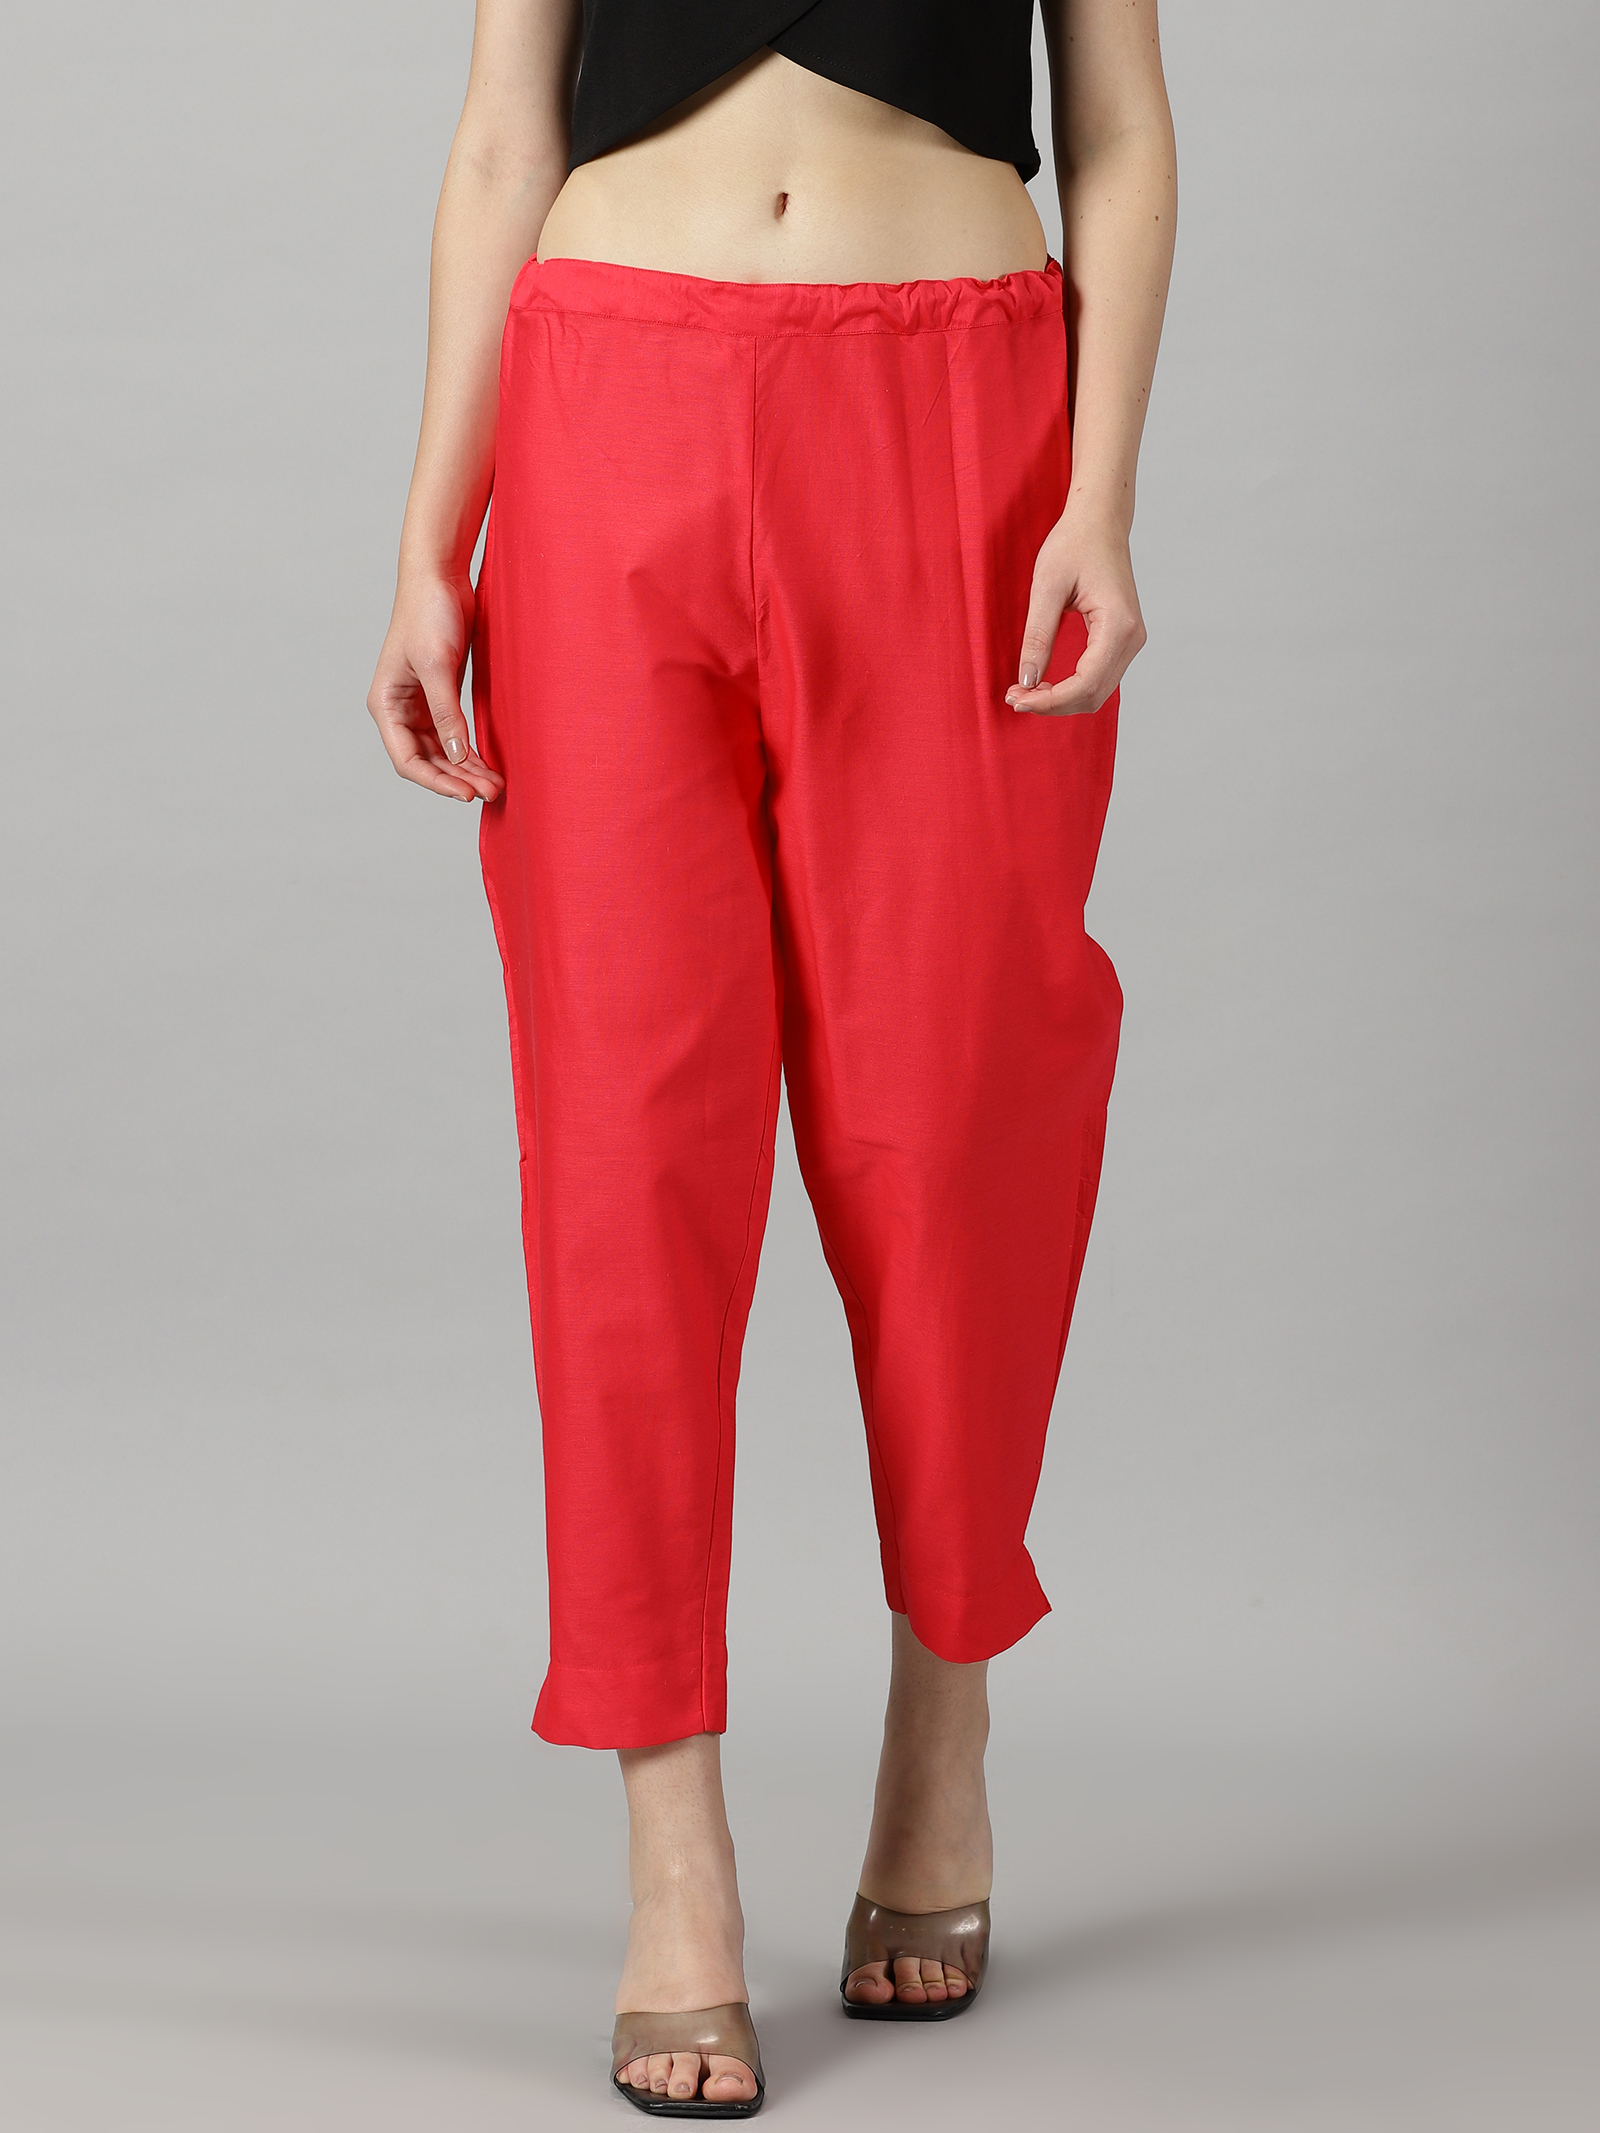 Buy Vero Moda Pink Regular Fit Pants for Women's Online @ Tata CLiQ